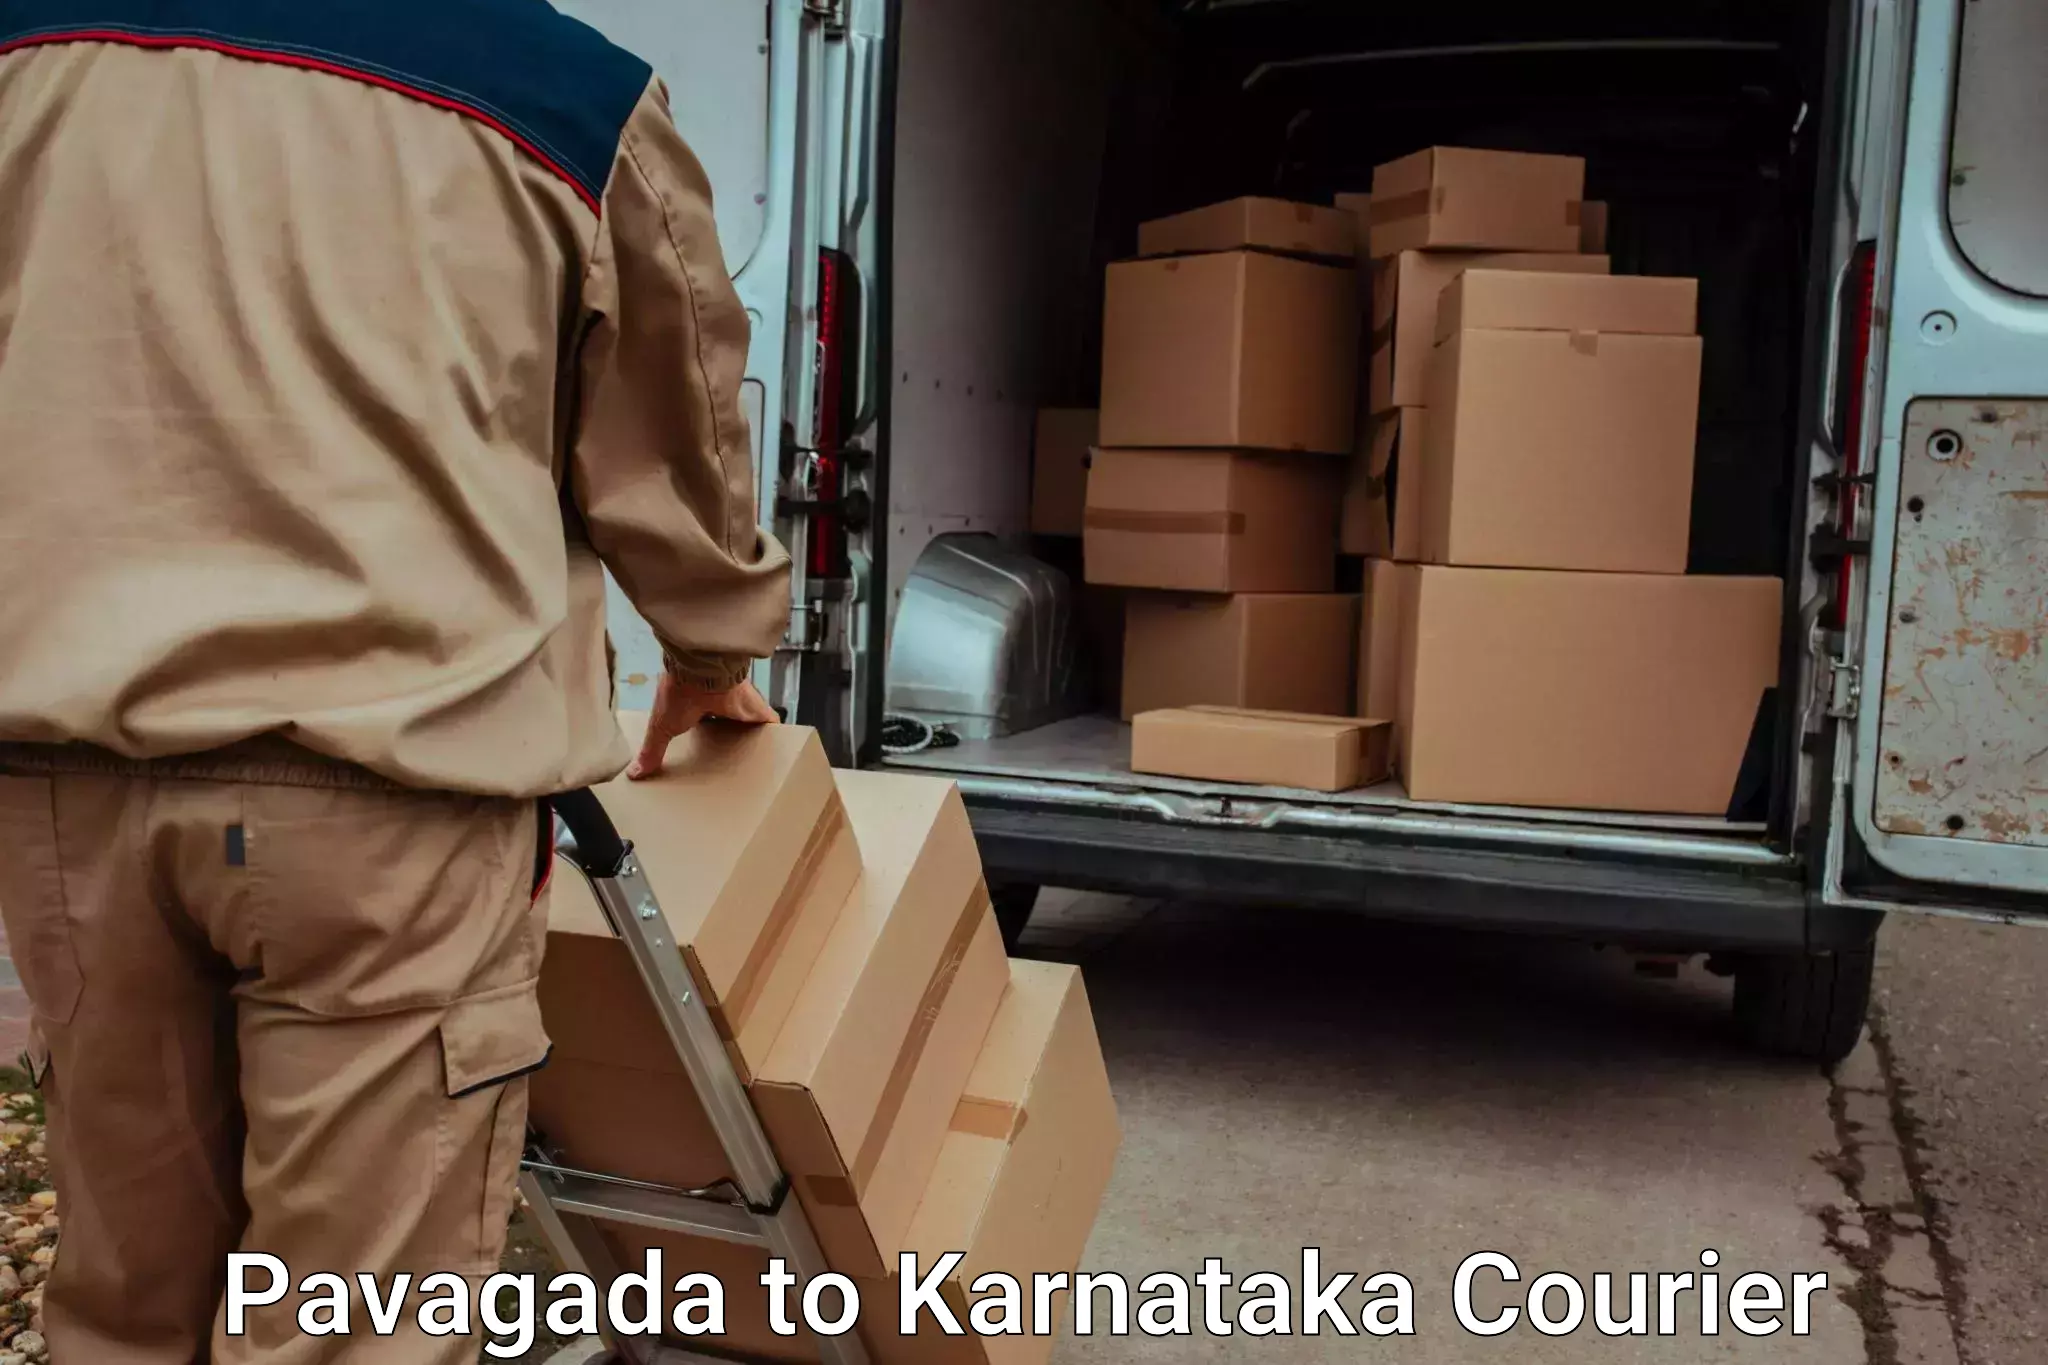 Furniture transport specialists Pavagada to Karnataka